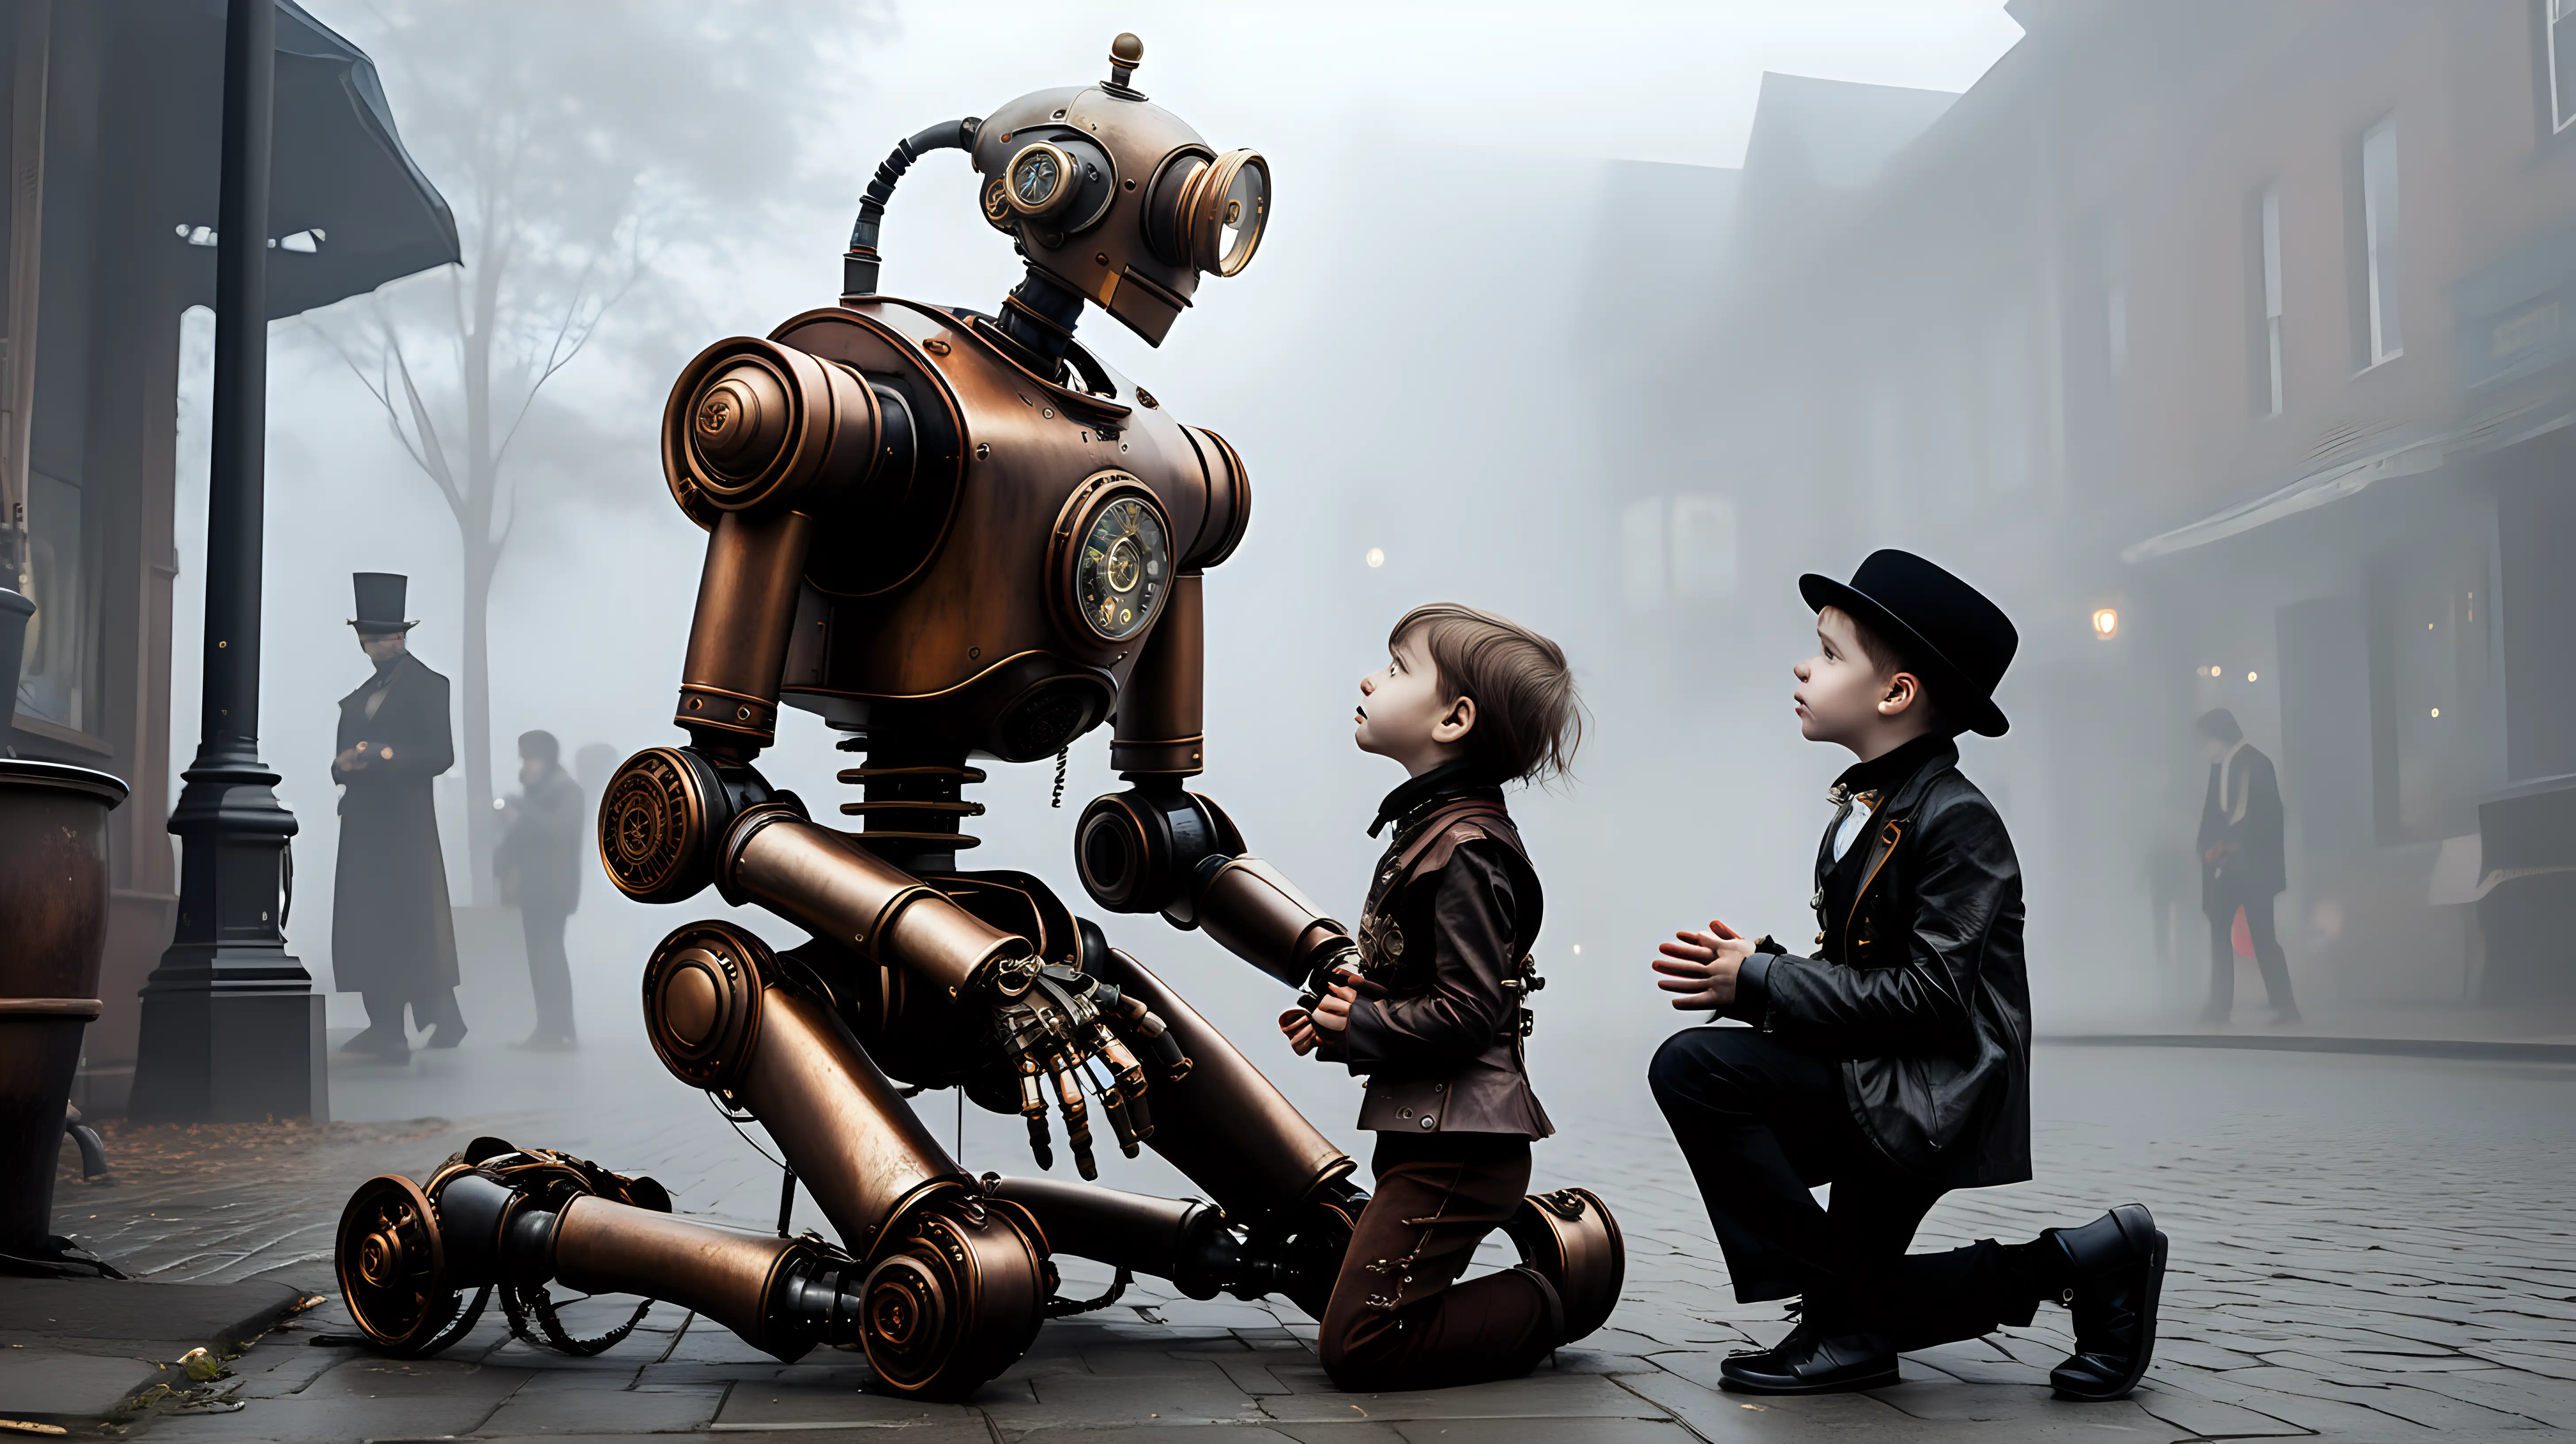 Steampunk robot kneeling, talking to a child, fog, street